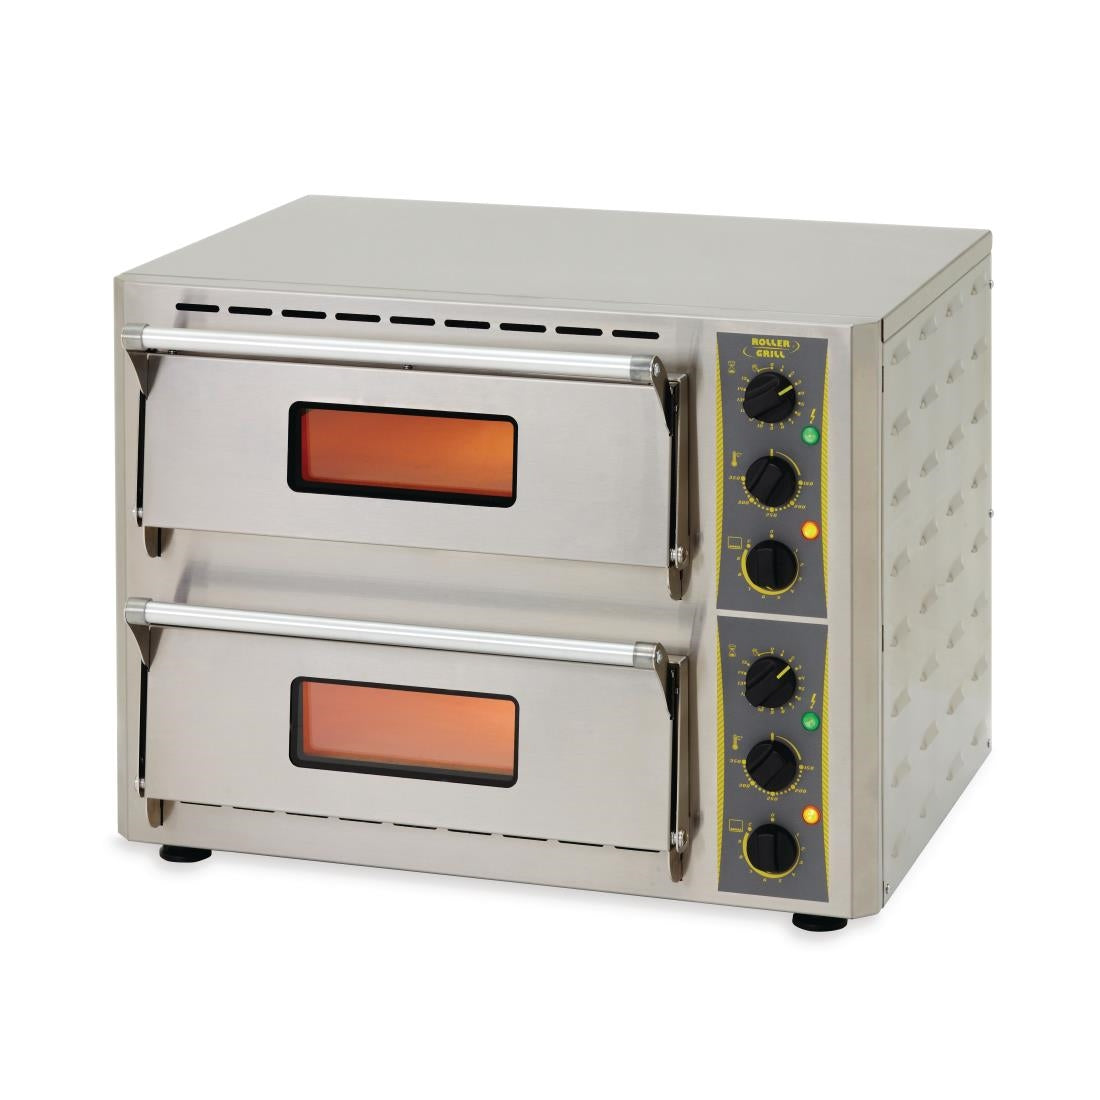 DA184 Roller Grill Double Deck Pizza Oven PZ430 D JD Catering Equipment Solutions Ltd